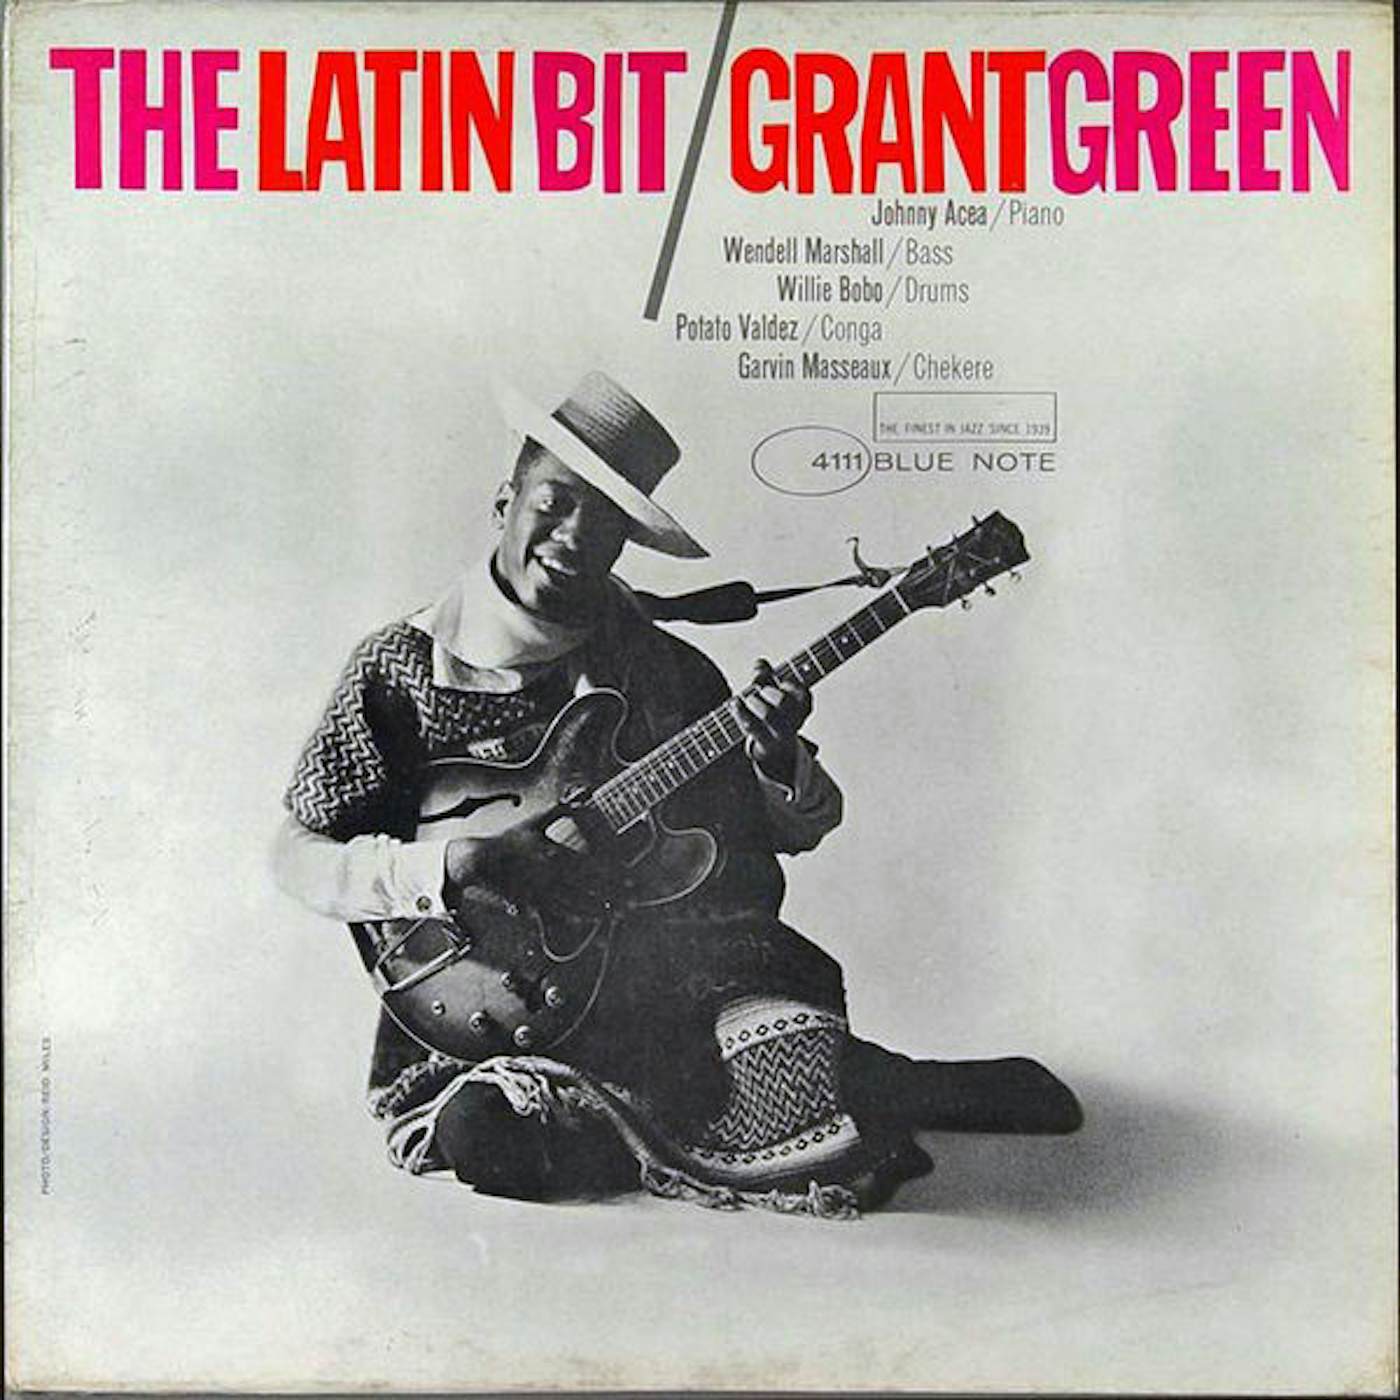 Grant Green LATIN BIT Vinyl Record